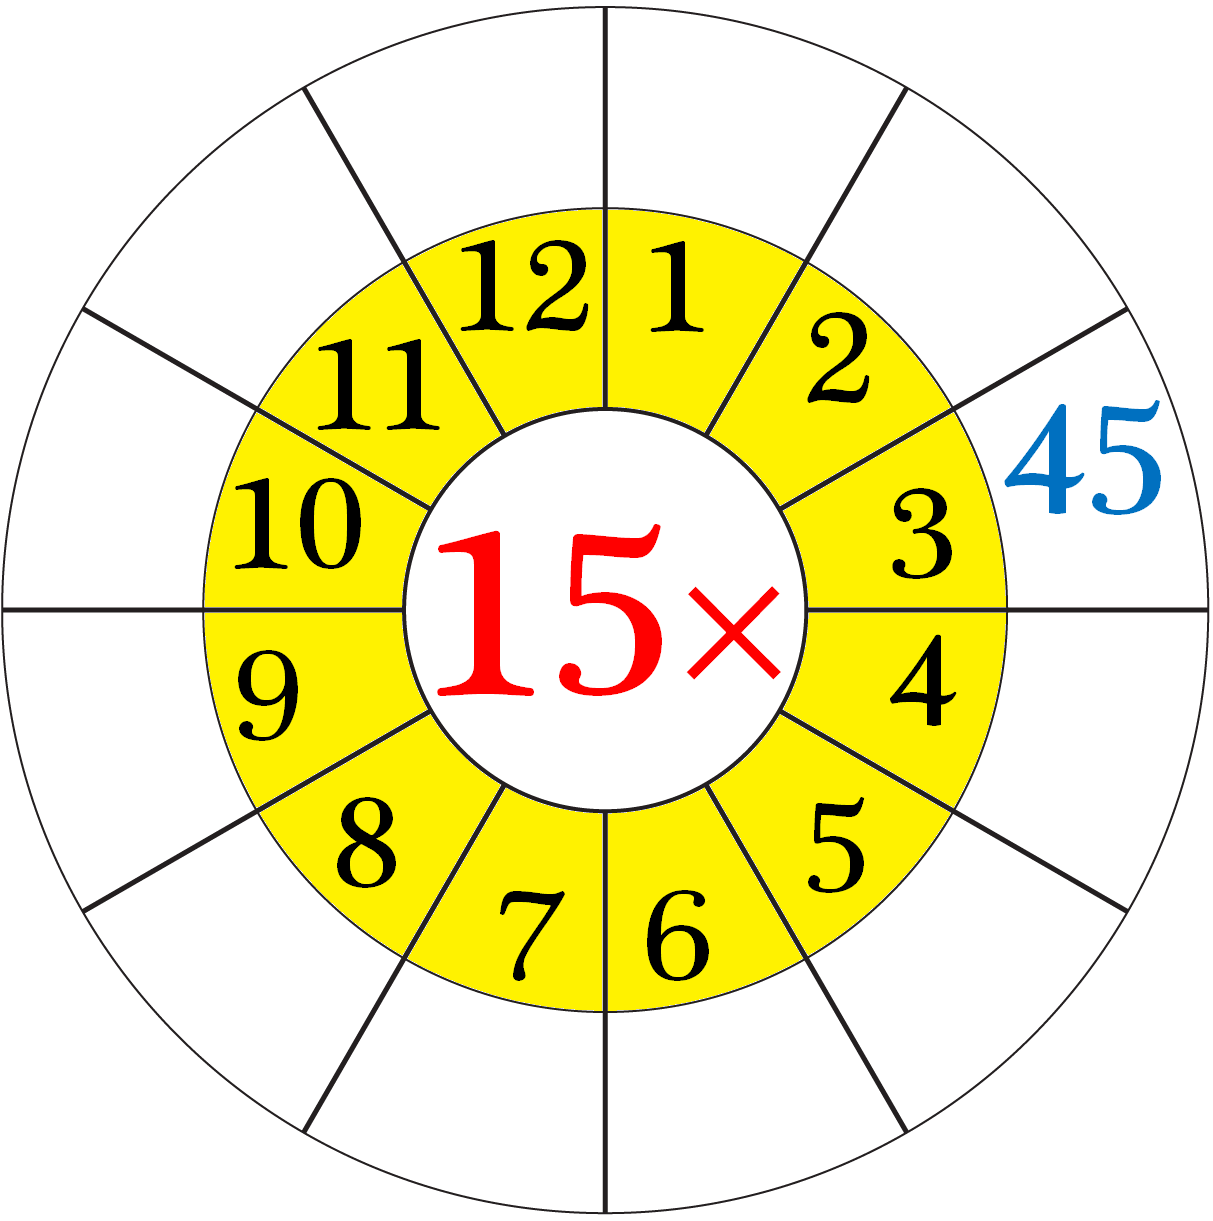 Worksheet on Multiplication Table of 15